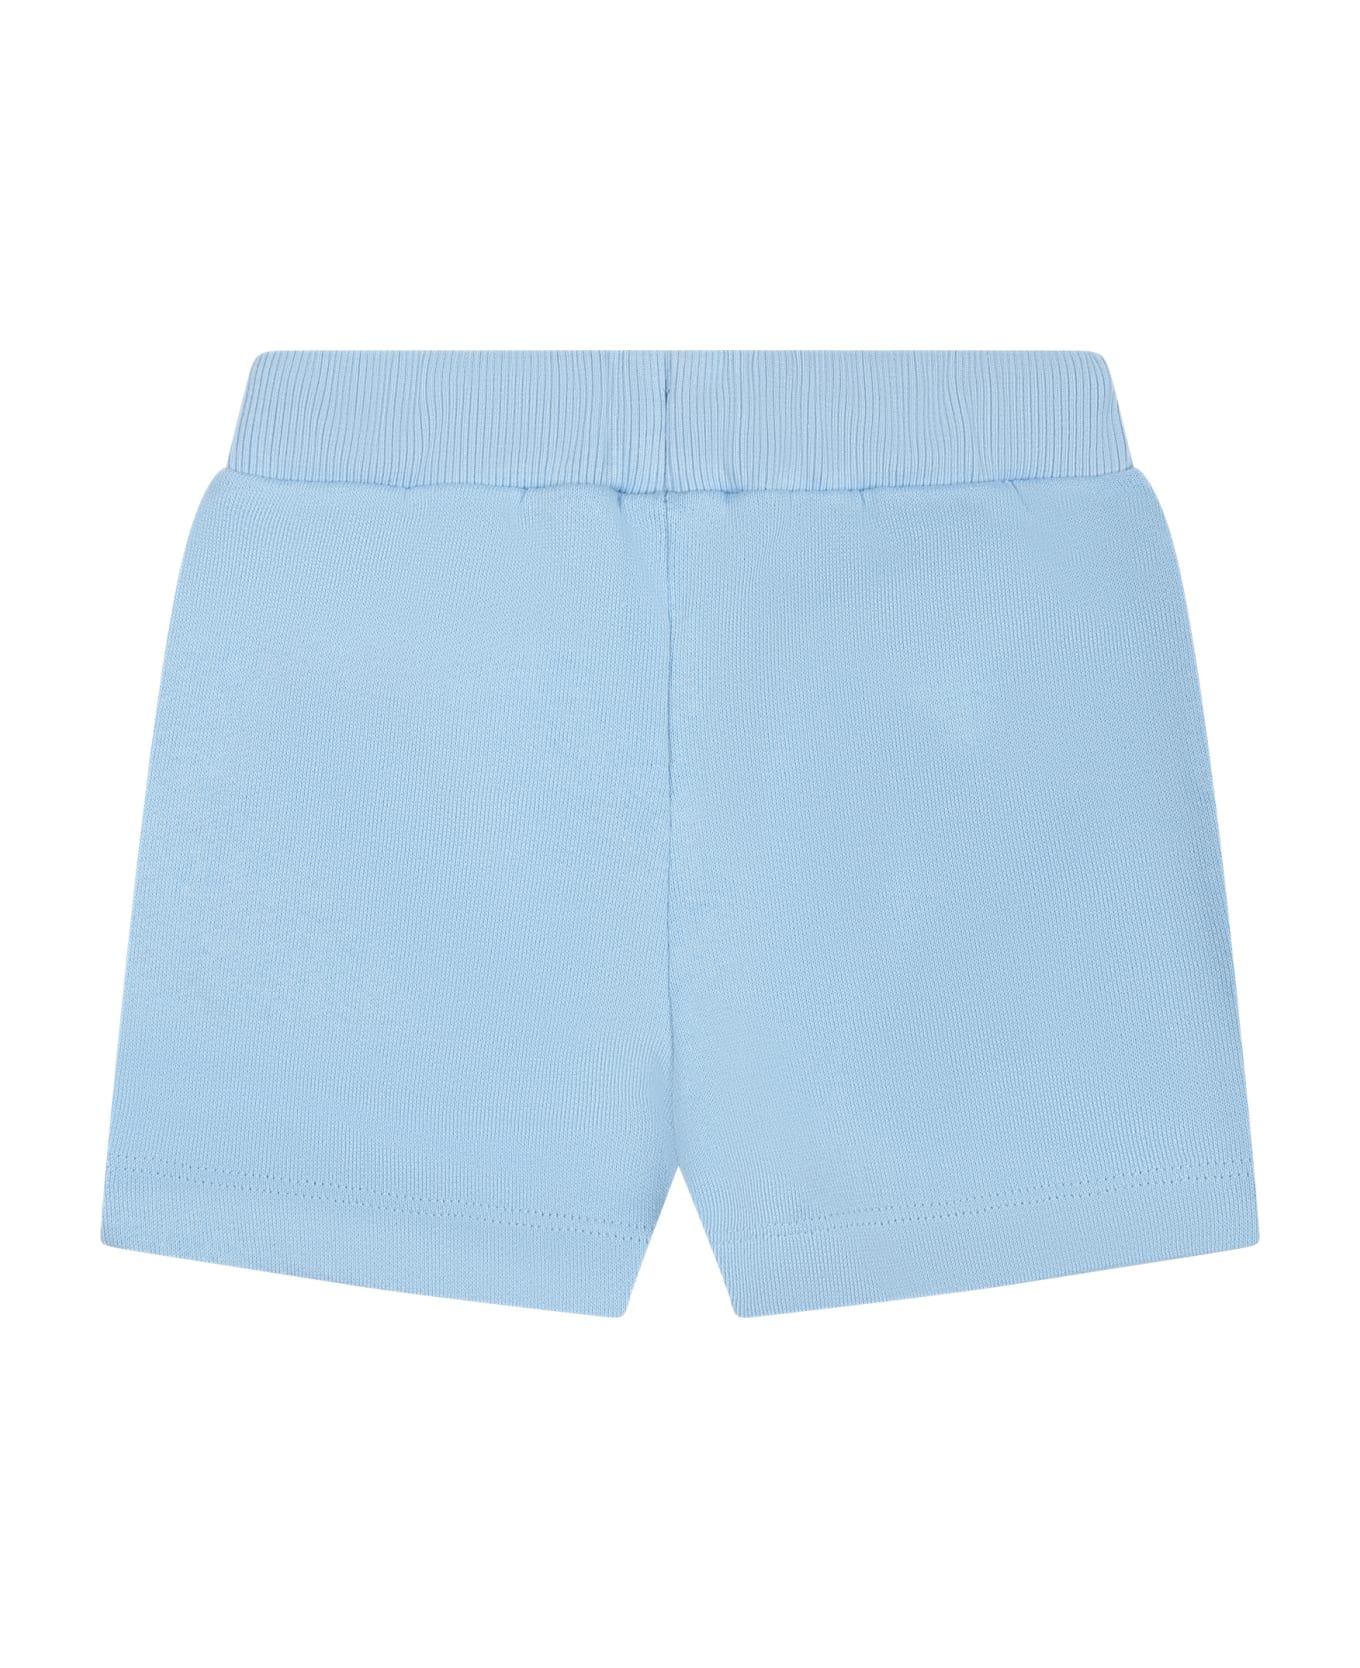 Kenzo Kids Light Blue Shorts For Baby Boy With Logo - Light Blue